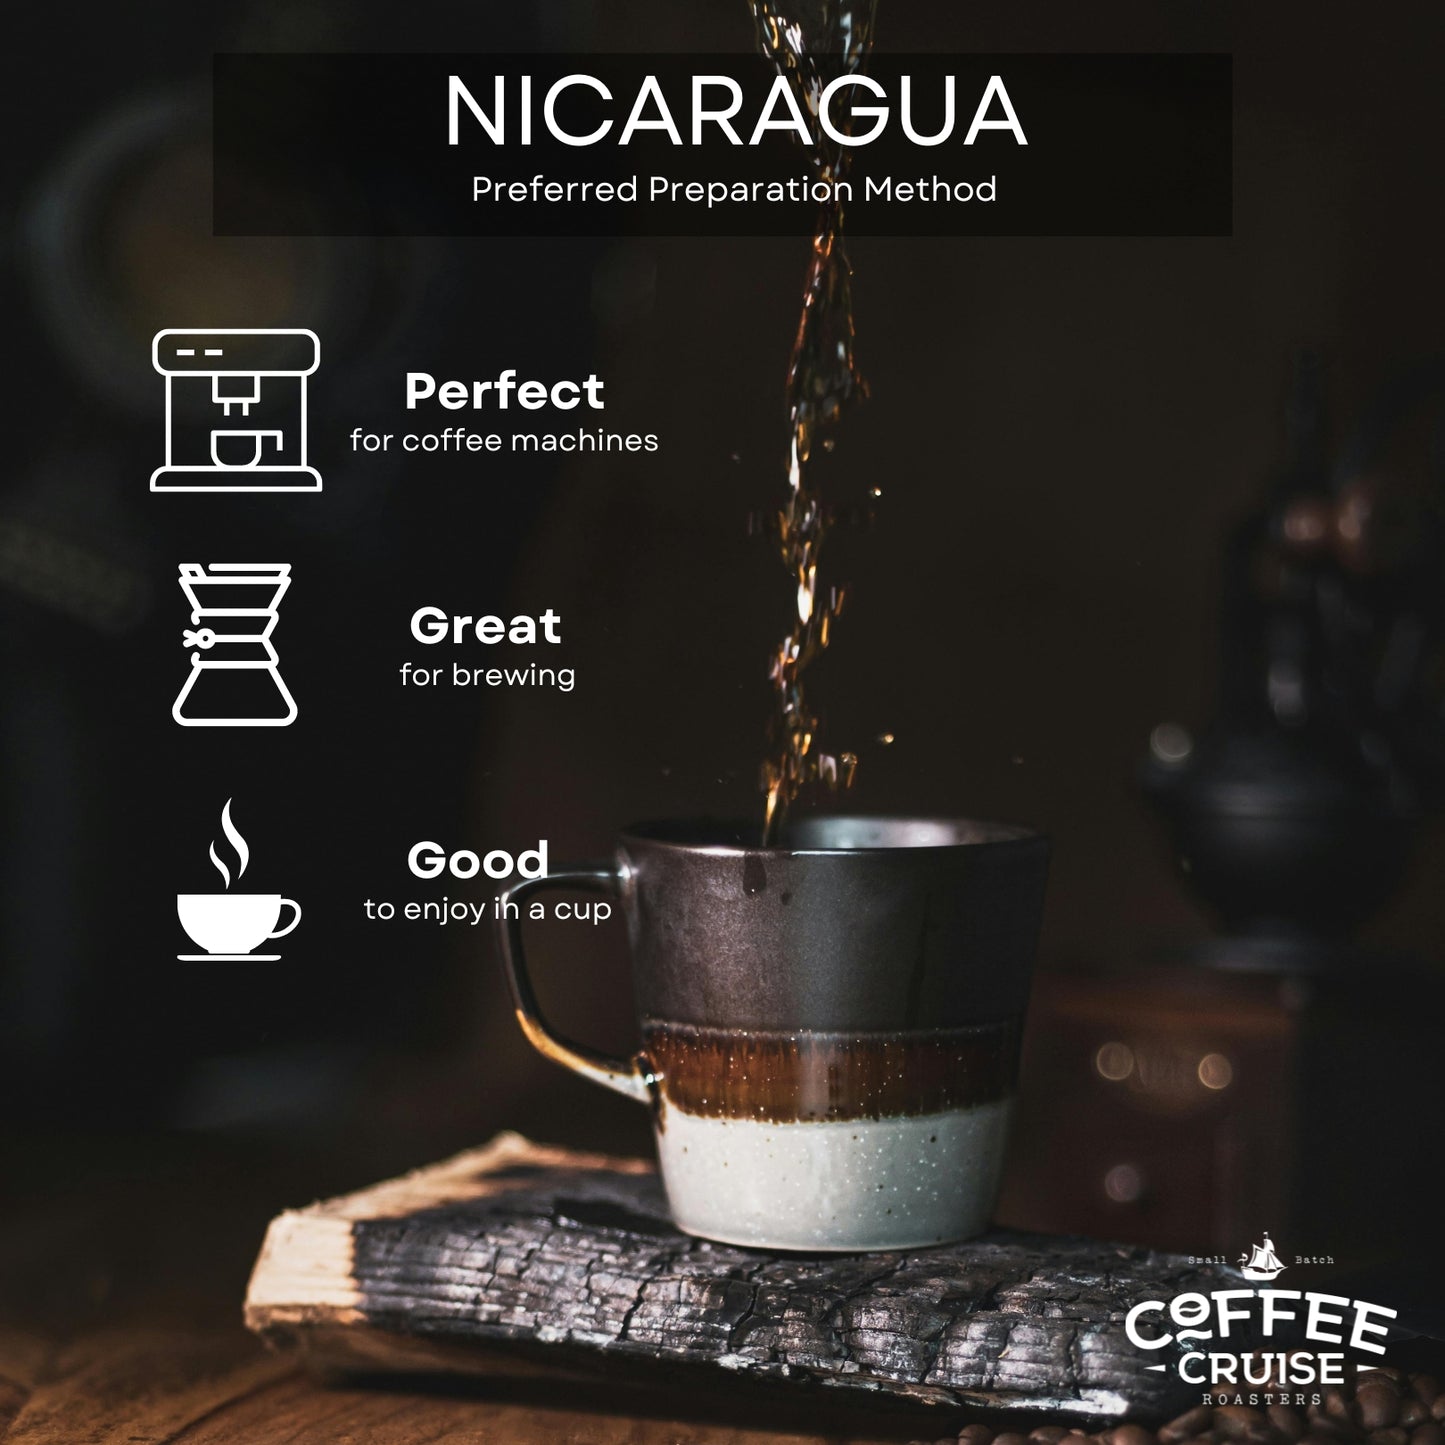 Nicaragua Coffee cruise, lukata beans coffee uk 100 Arabica